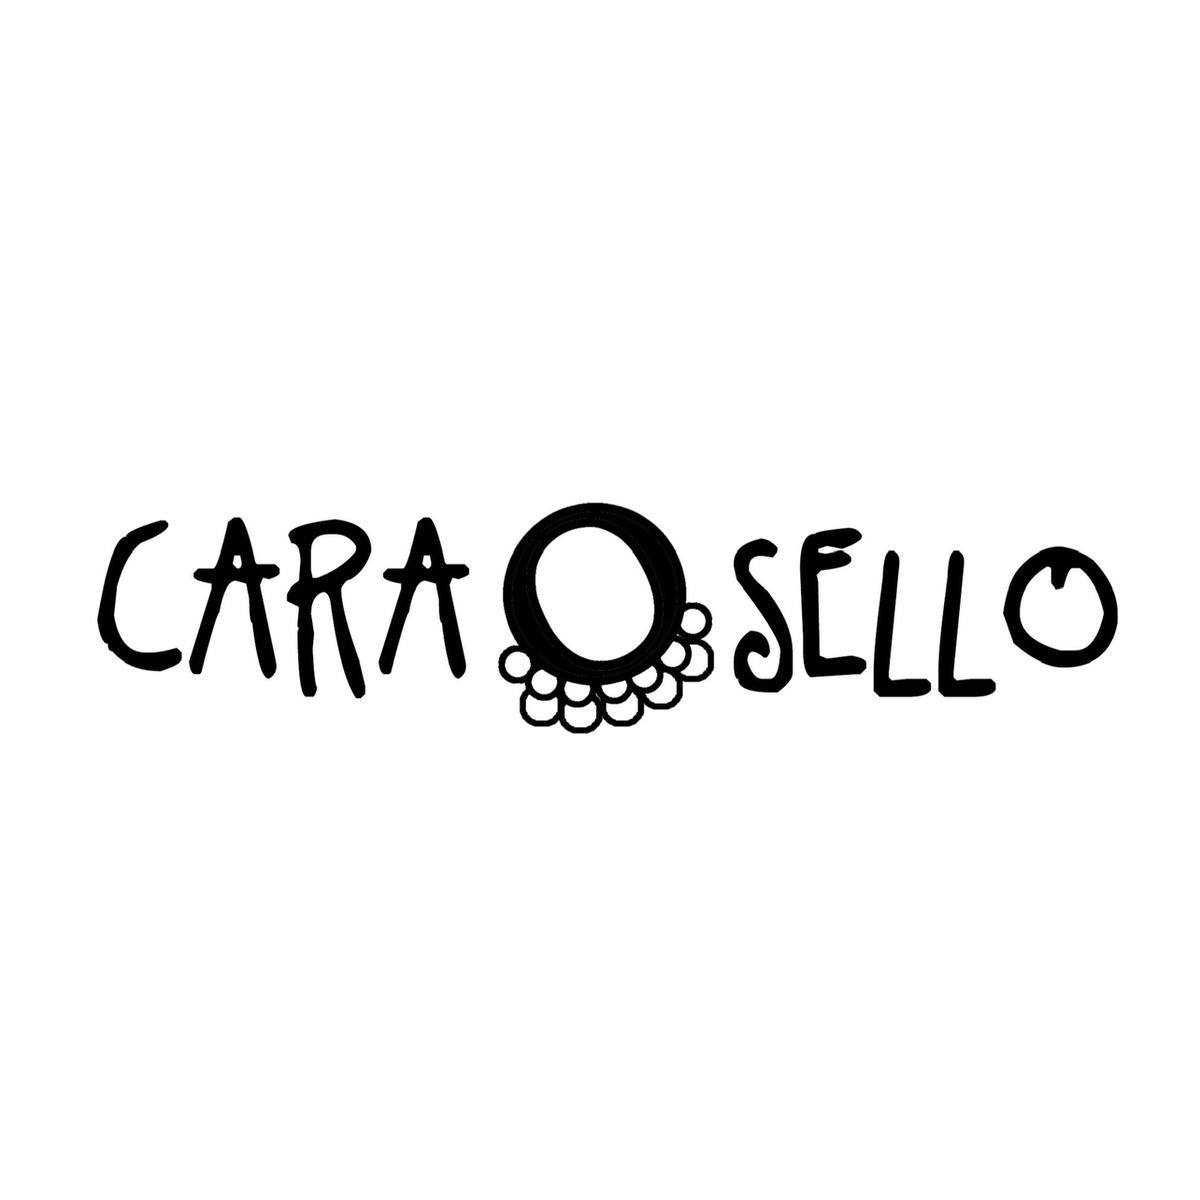 Cara O Sello's images